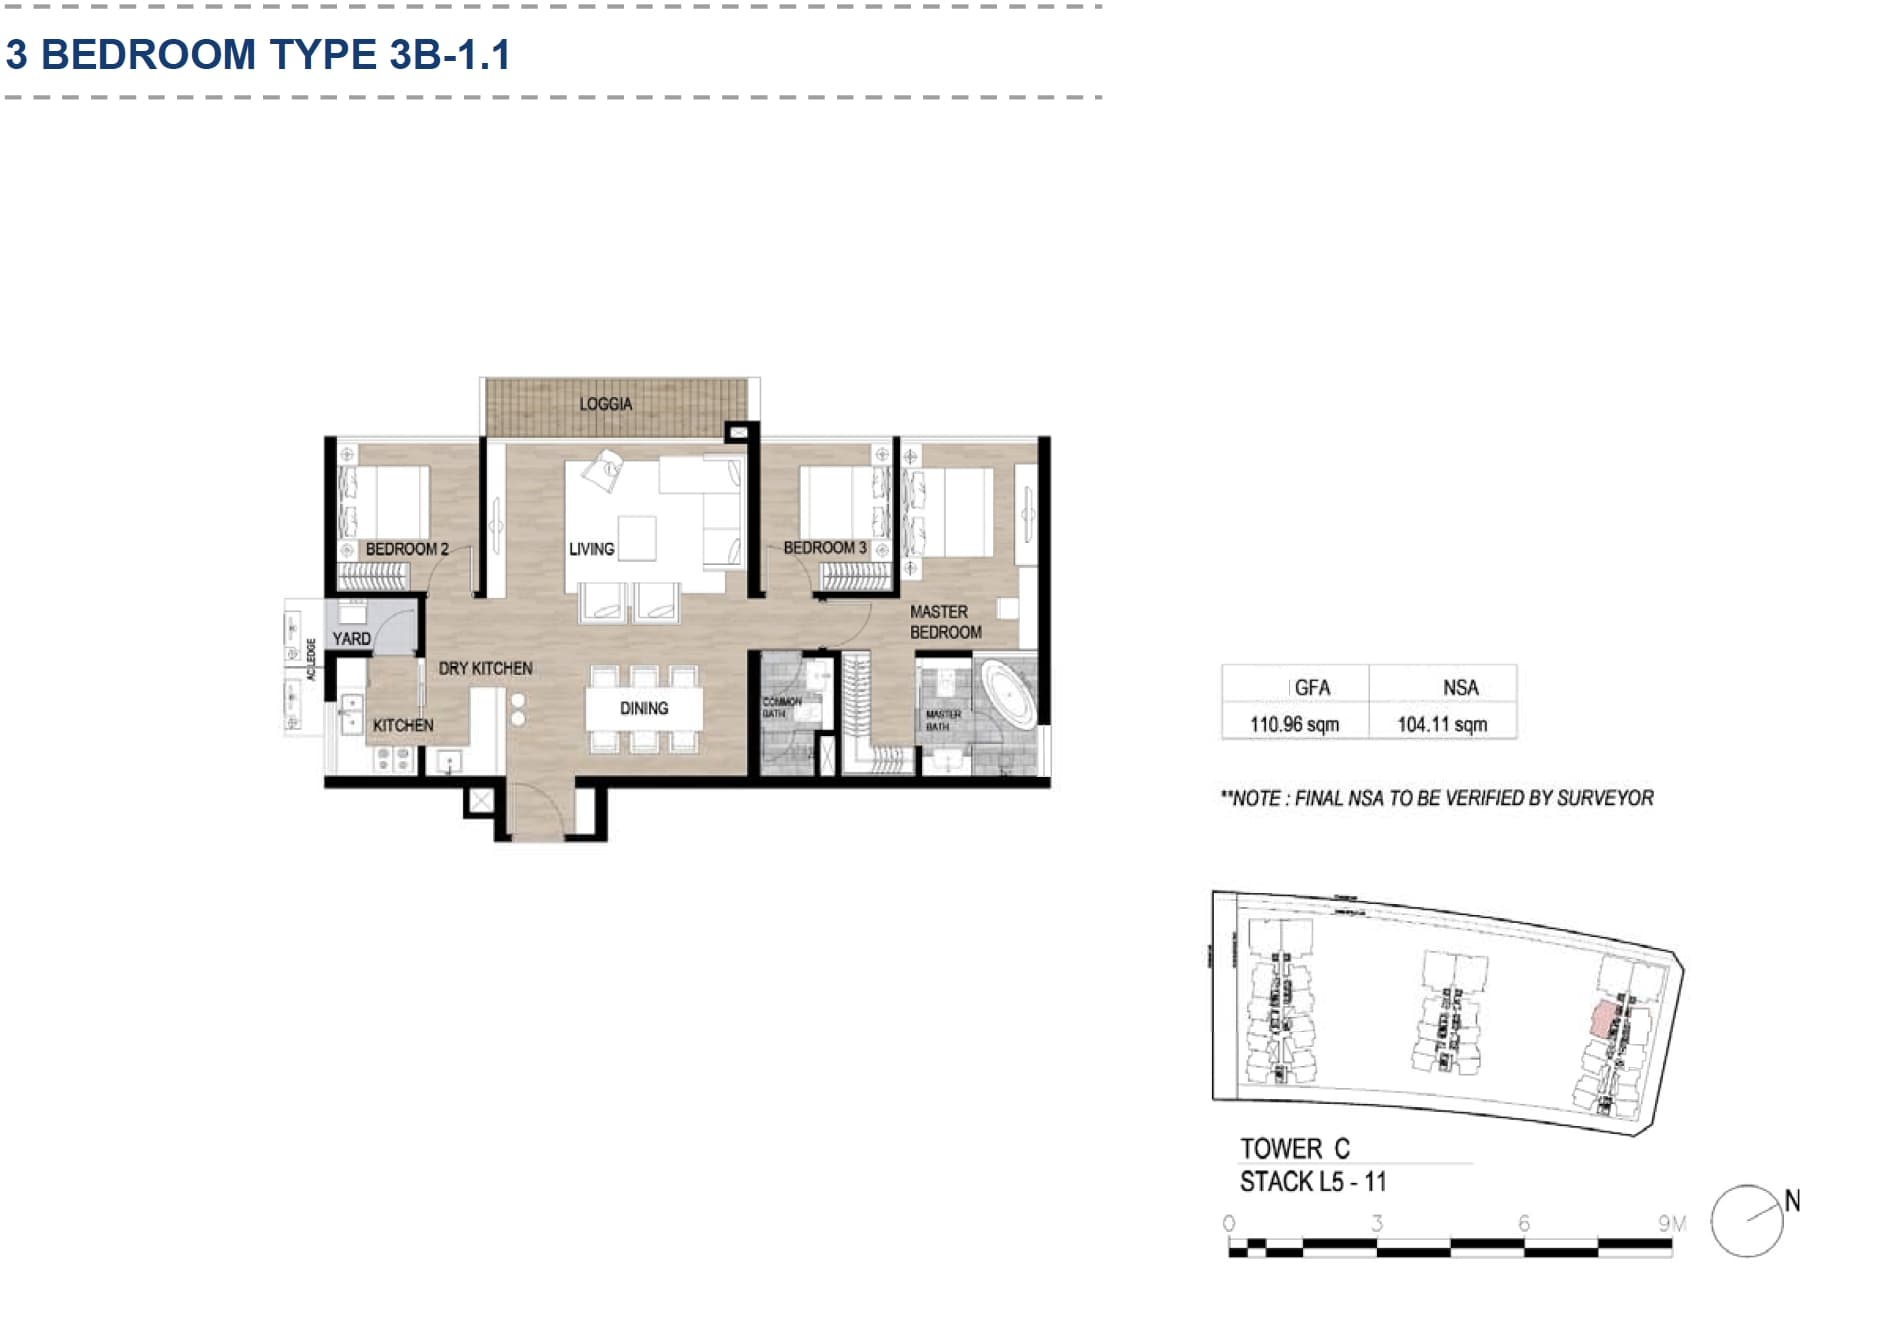 Floor plan of 3-bedroom apartment in Metropole Thu Thiem 2